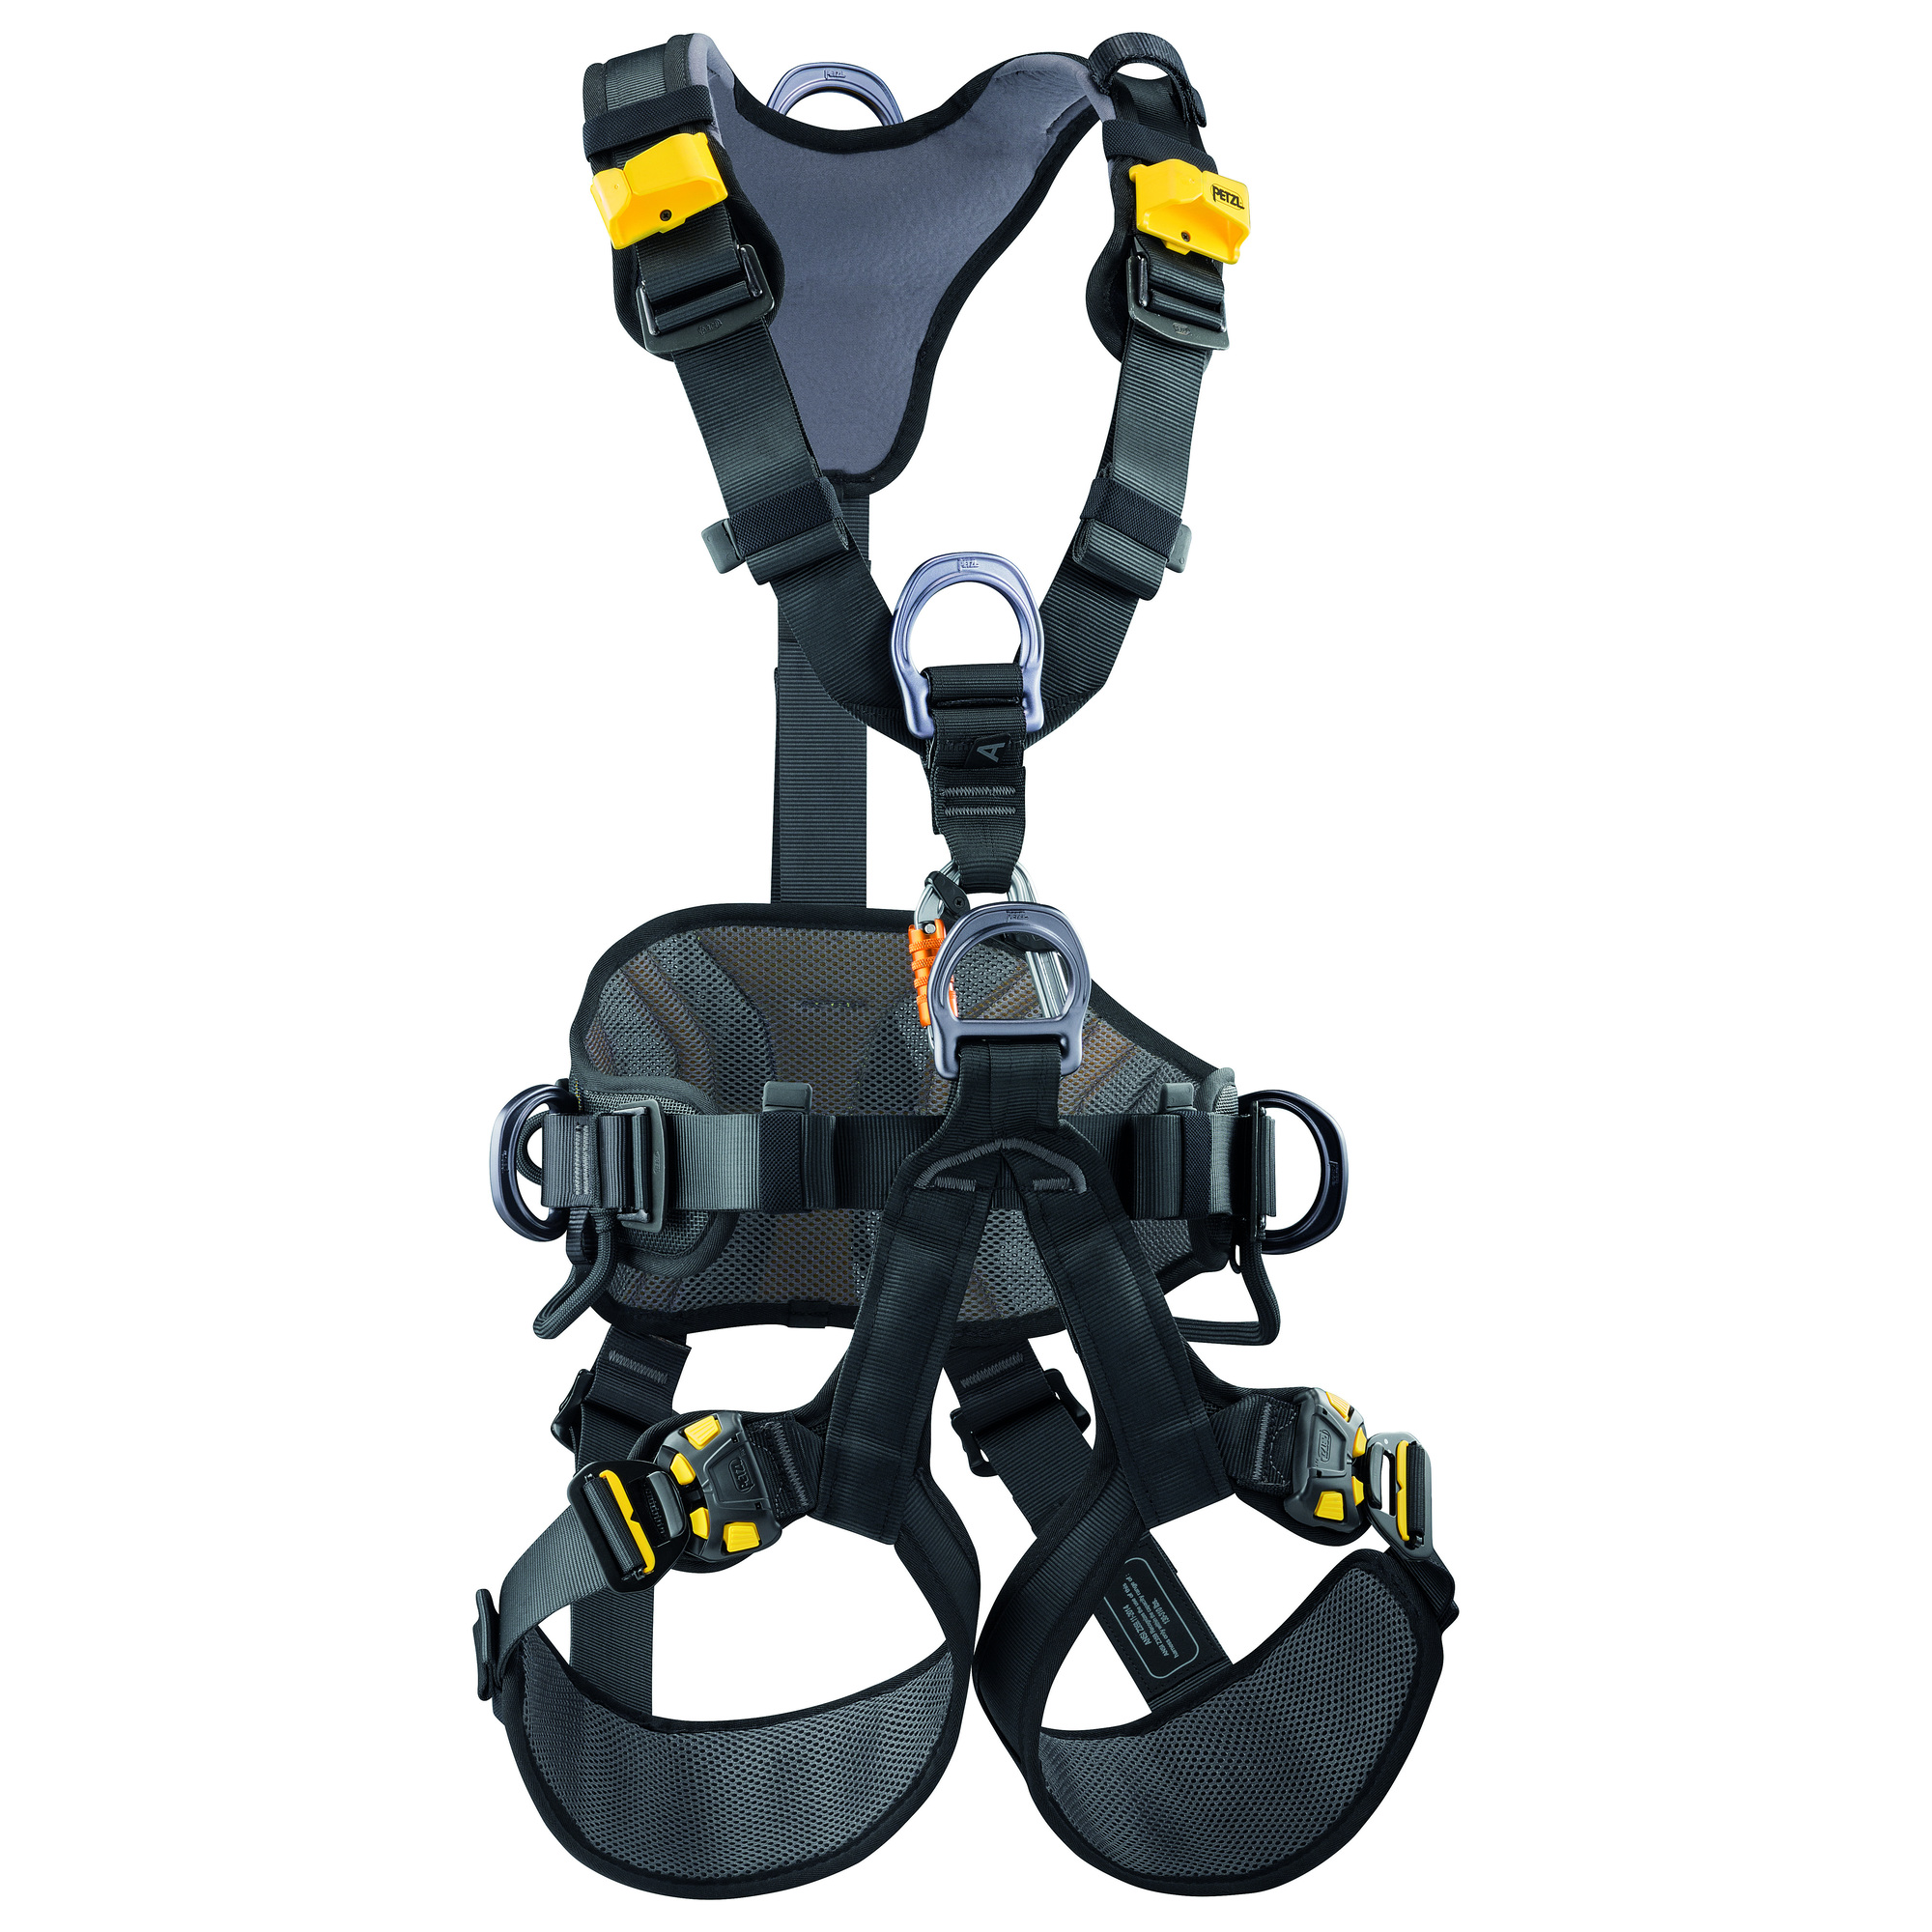 Petzl, AVAO BOD FAST fall arrest suspension harness sz1 Weight Capacity 310 lb, Harness Size M, Model C071DA01